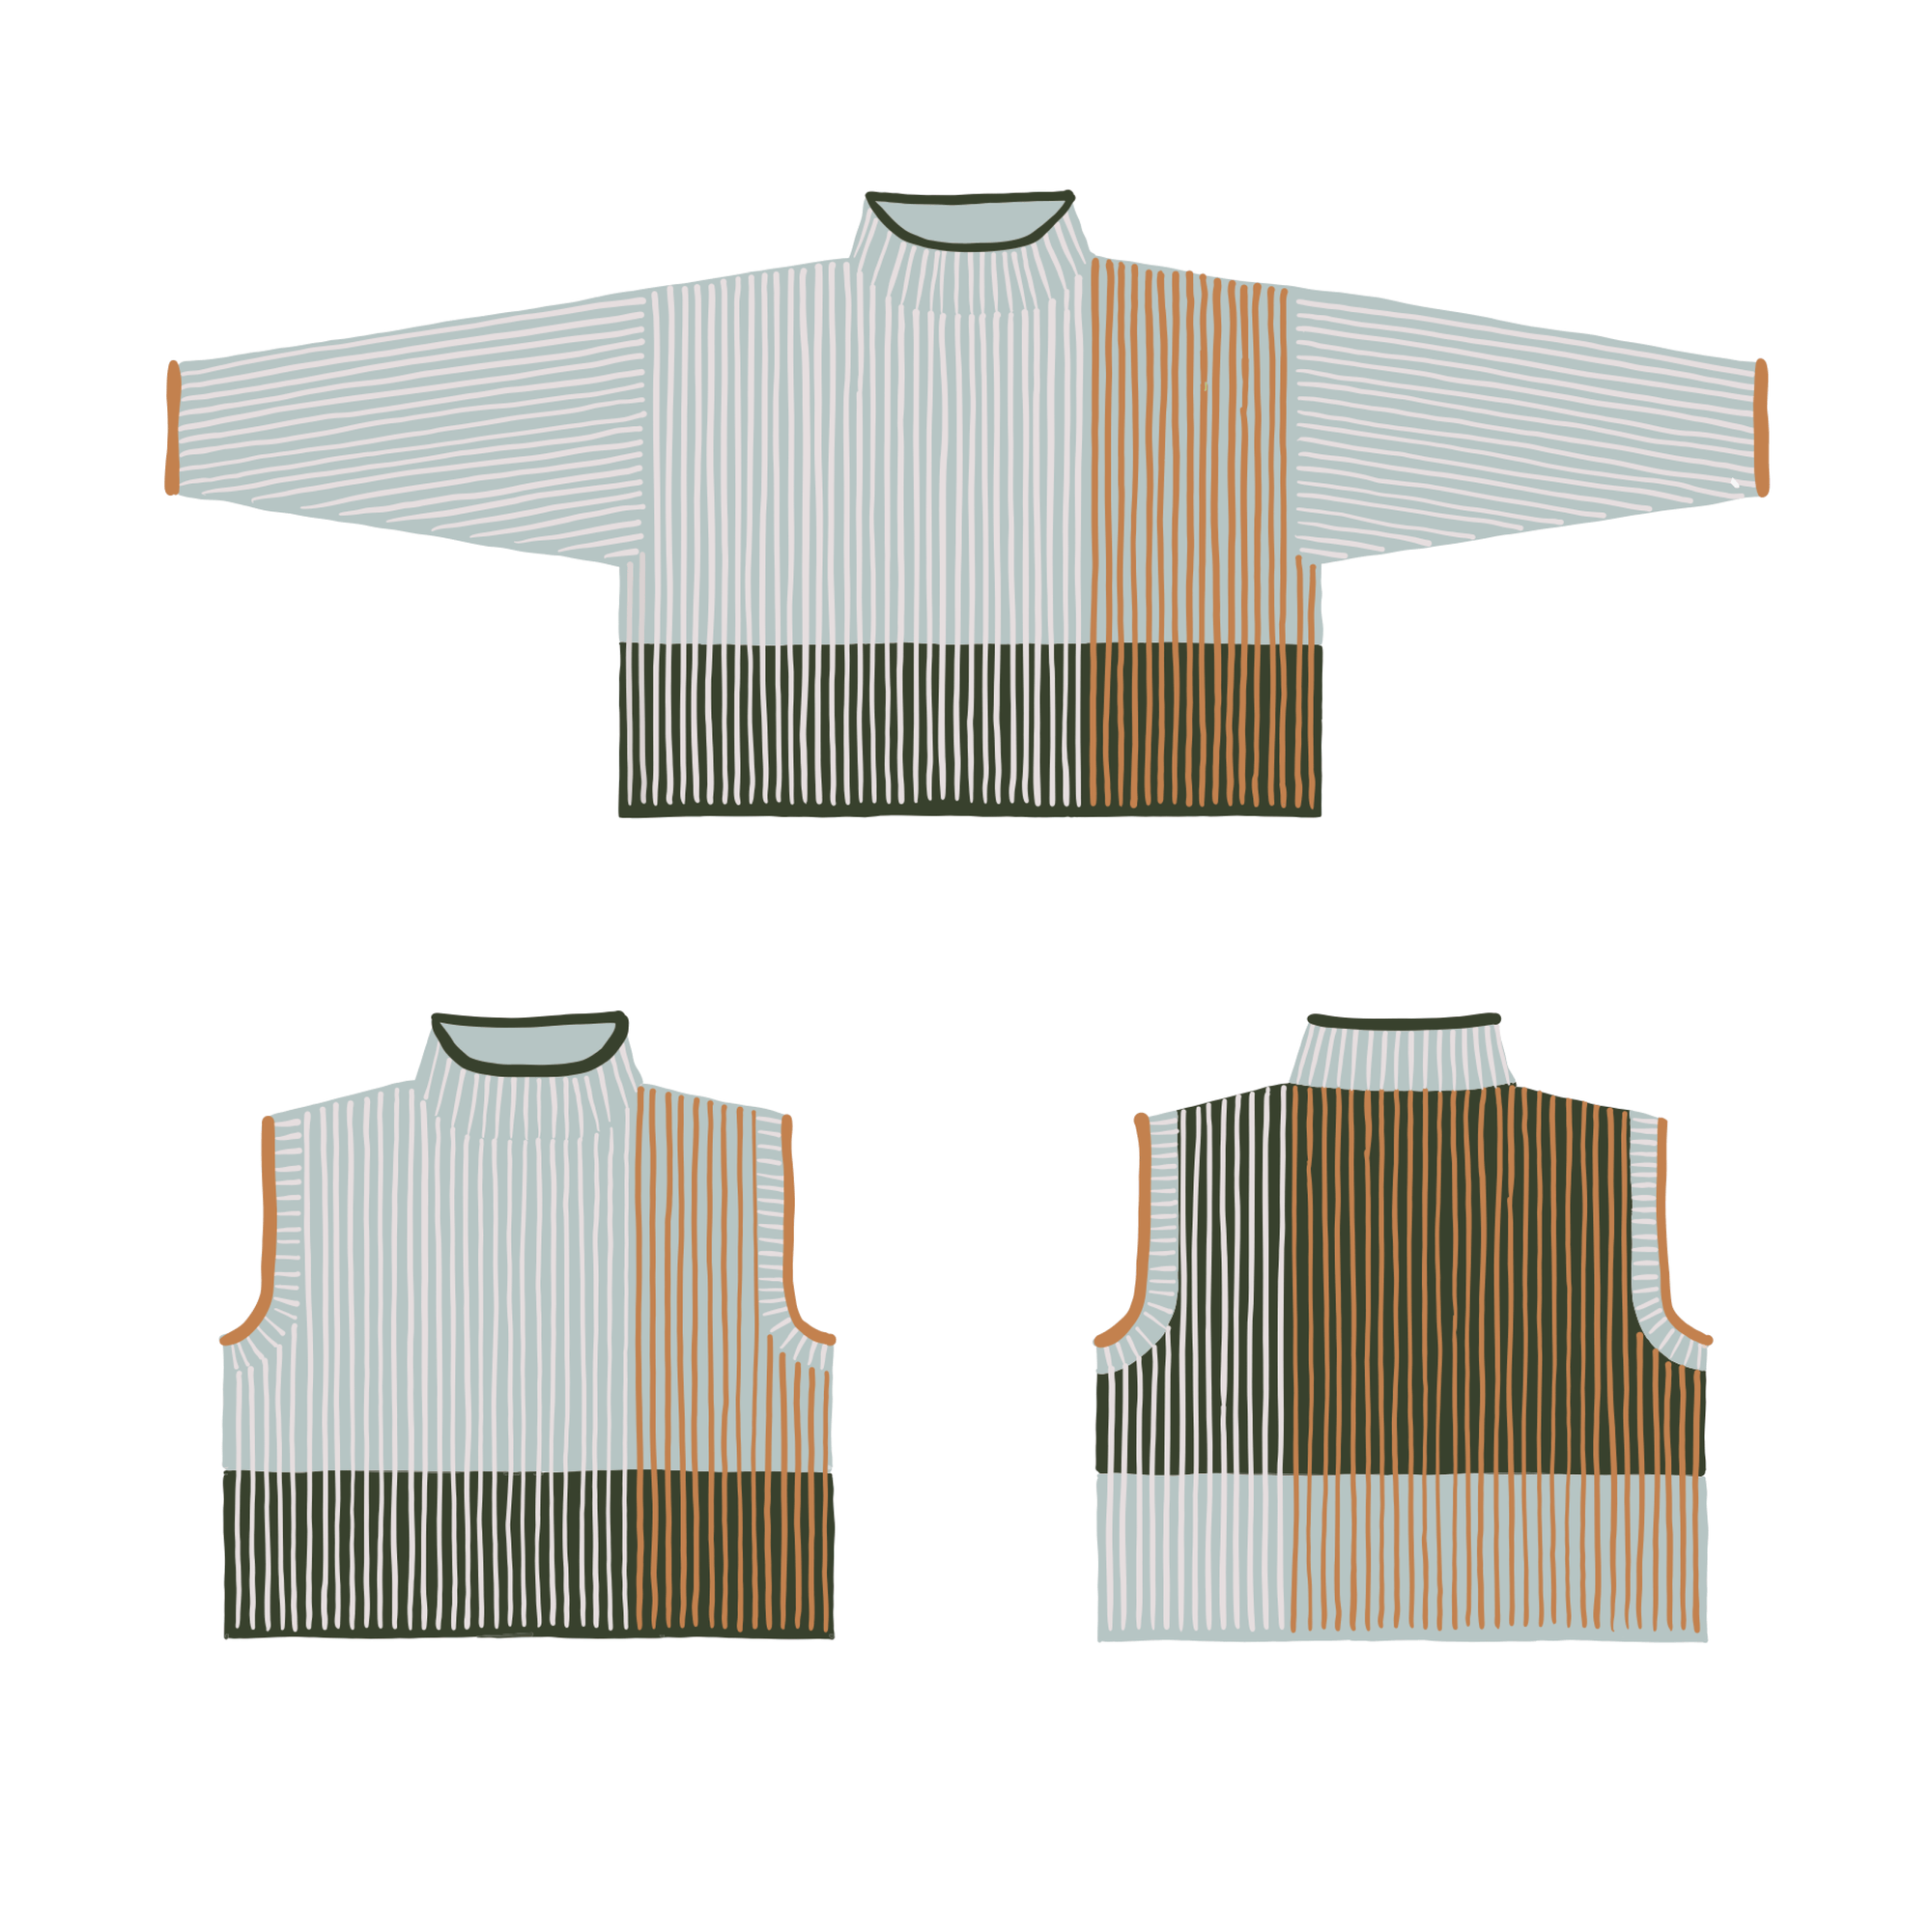 Louie & Lola Yarns Overlay Sweater & Vest Kits - Cormo Fingering & Mohair Silk Lace - Kit 2